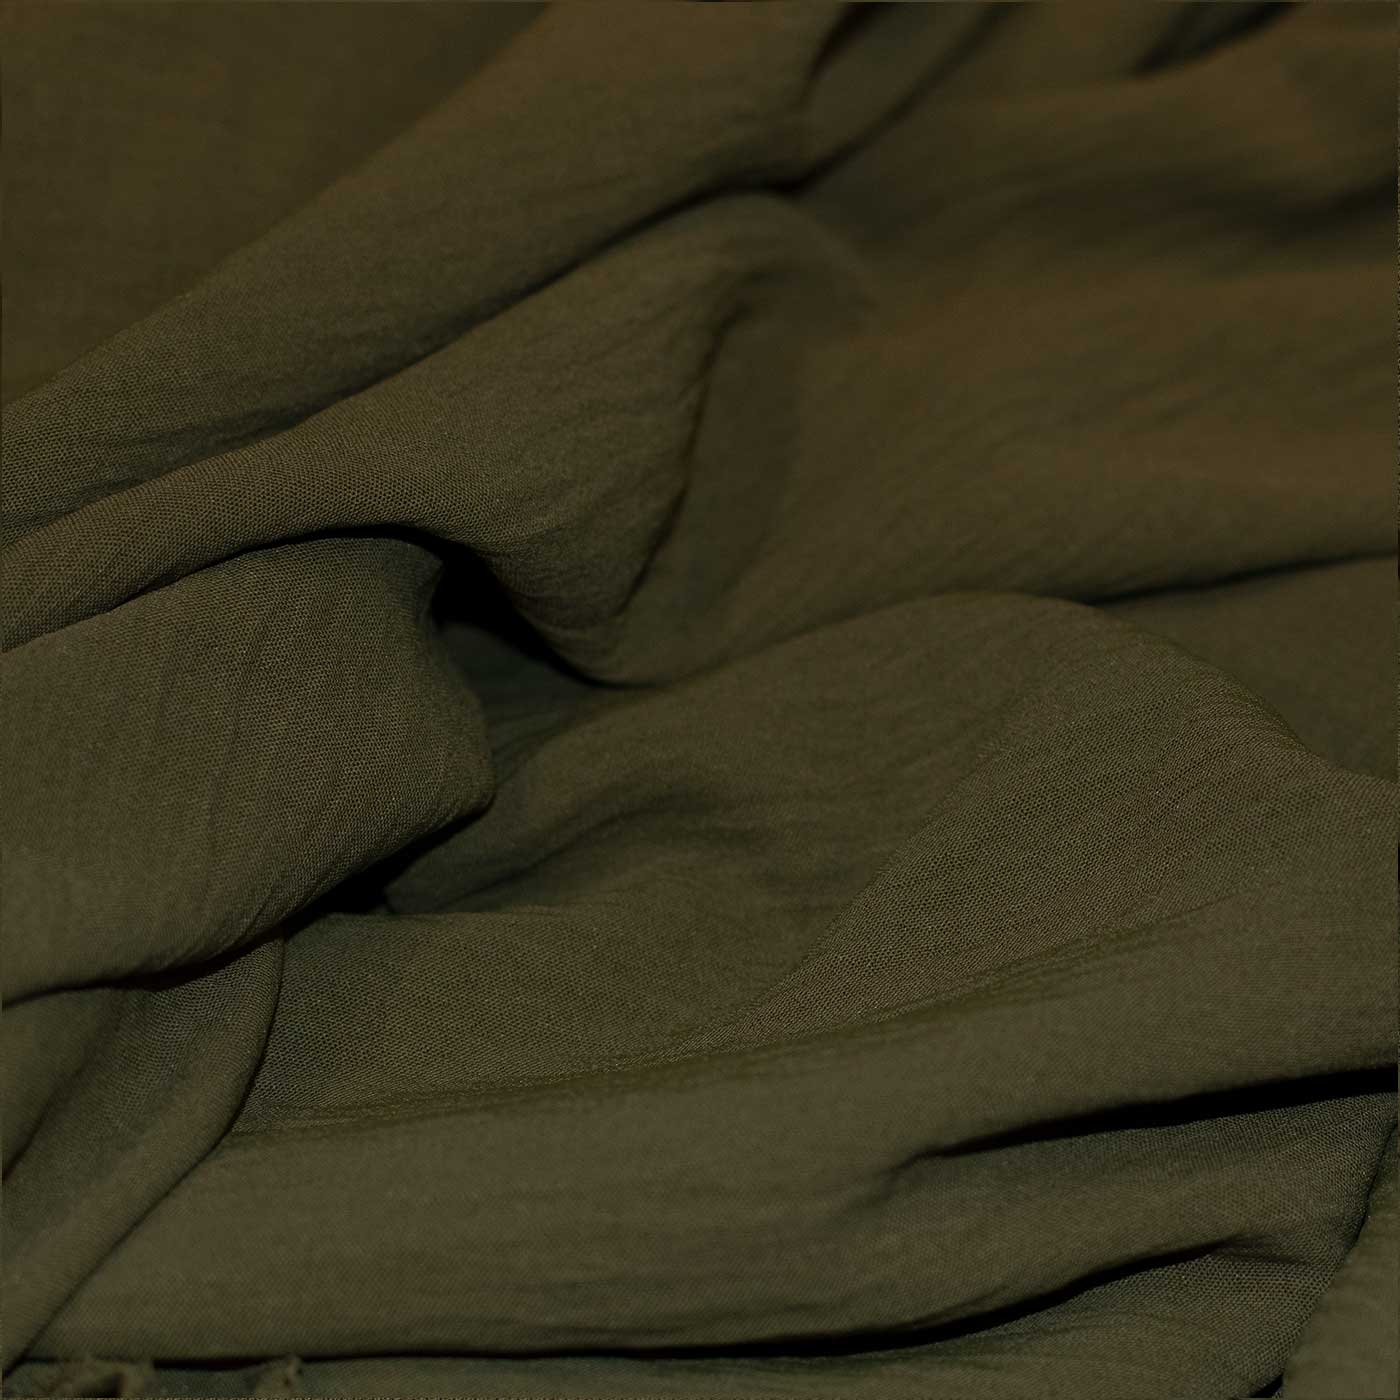 Olive Green Gauze Fabric